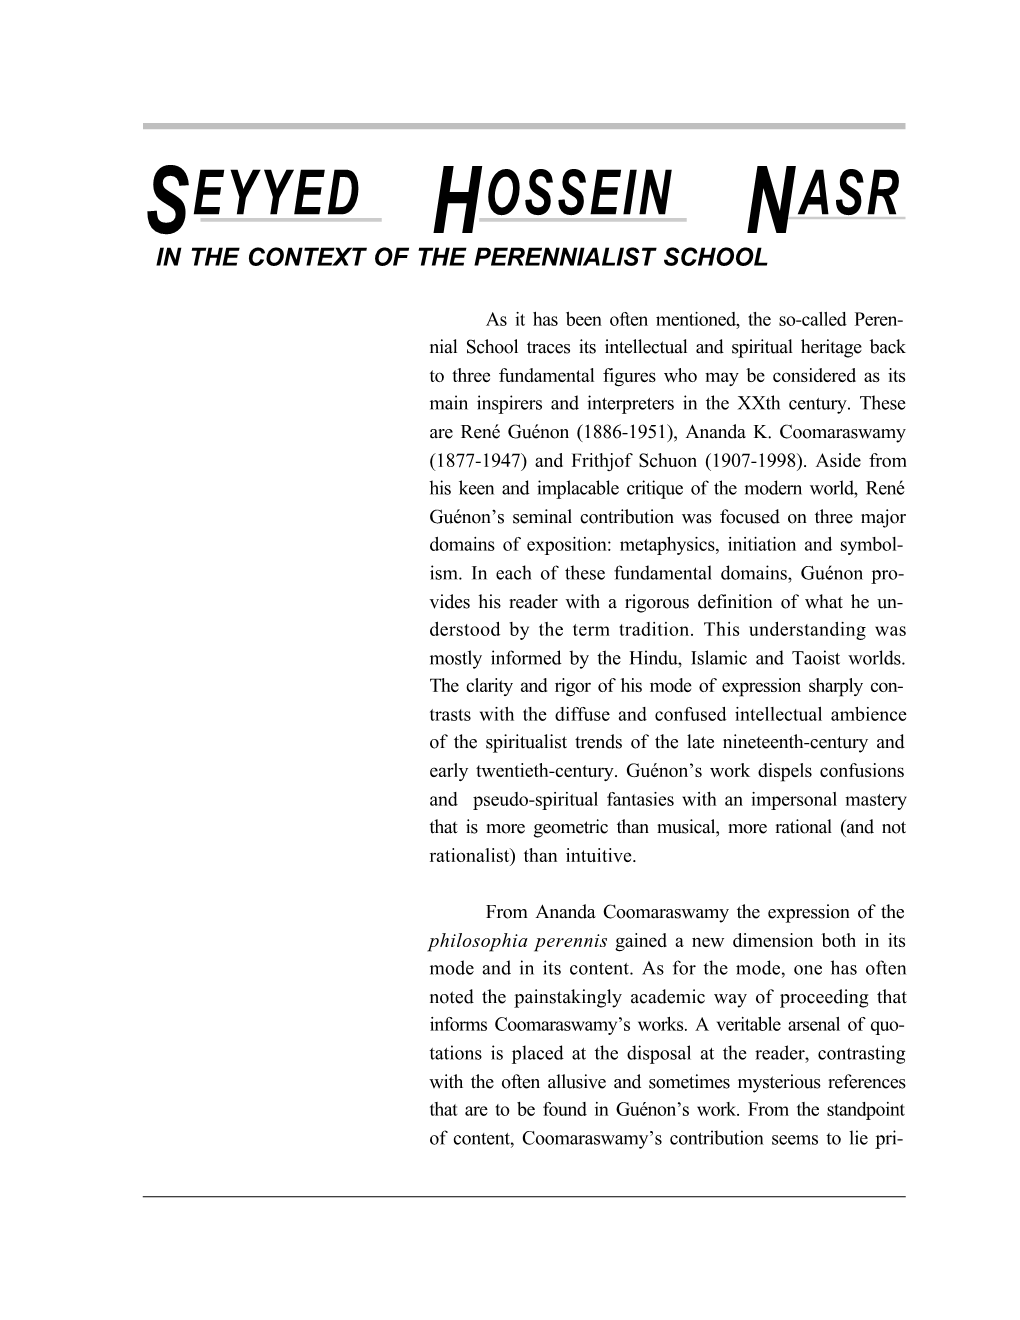 Seyyed Hossein Nasr in the Context of the Perennialist School